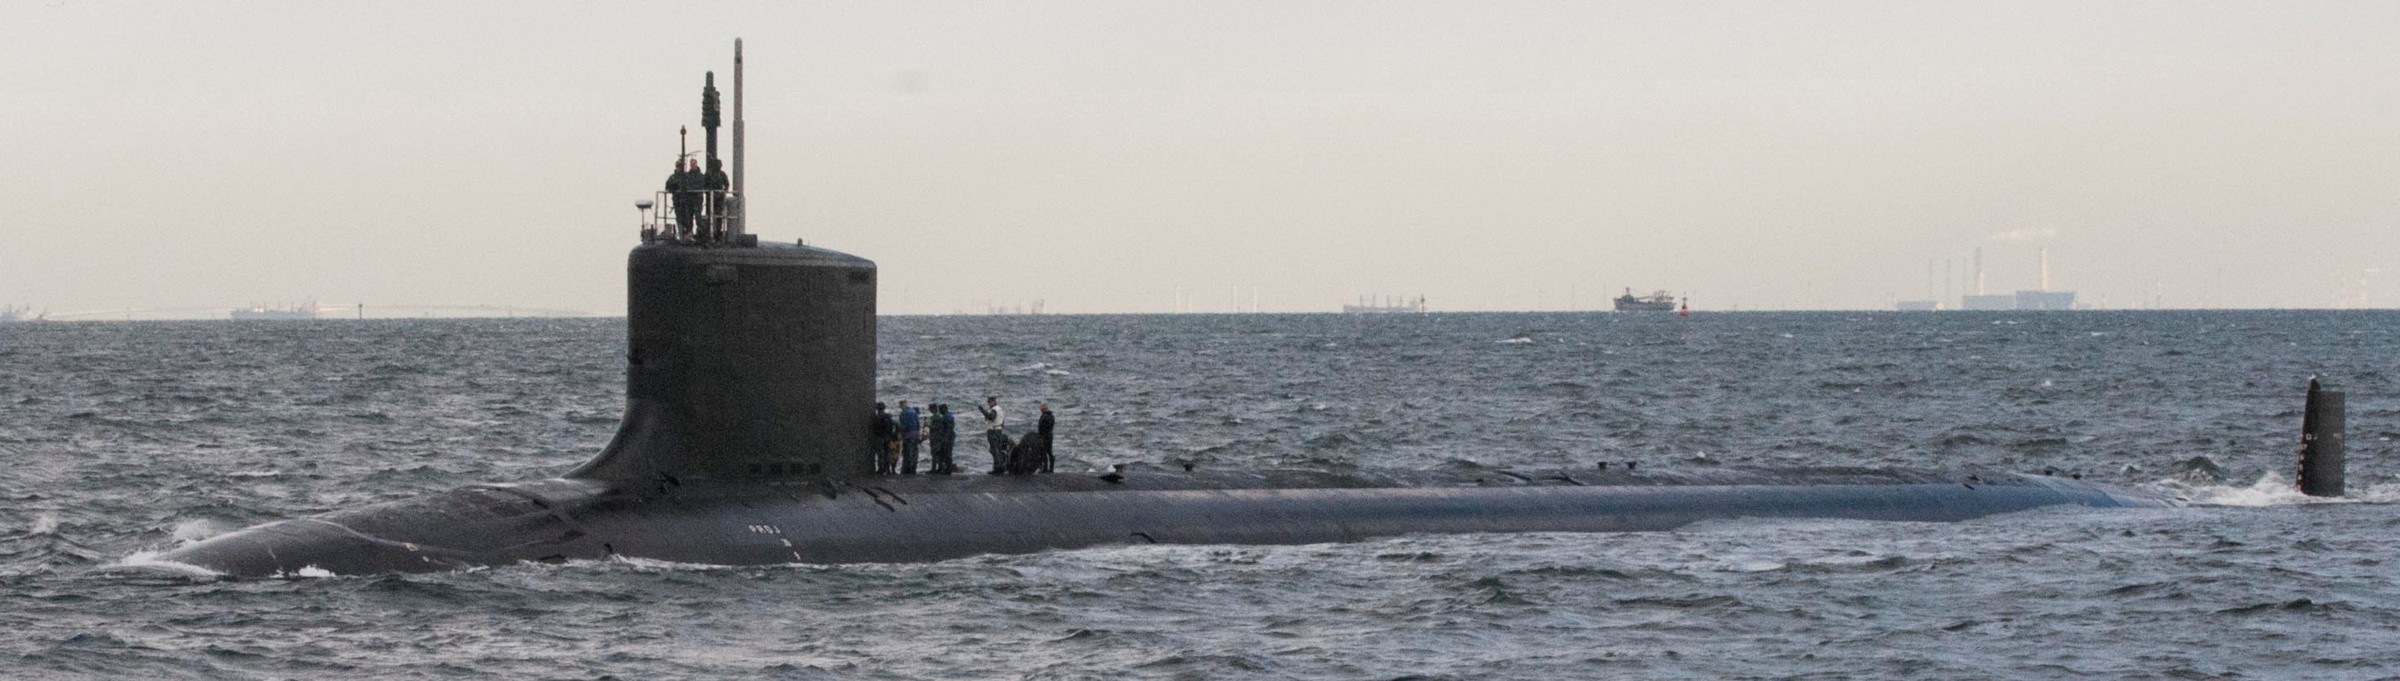 ssn-775 uss texas virginia class attack submarine navy 2015 13